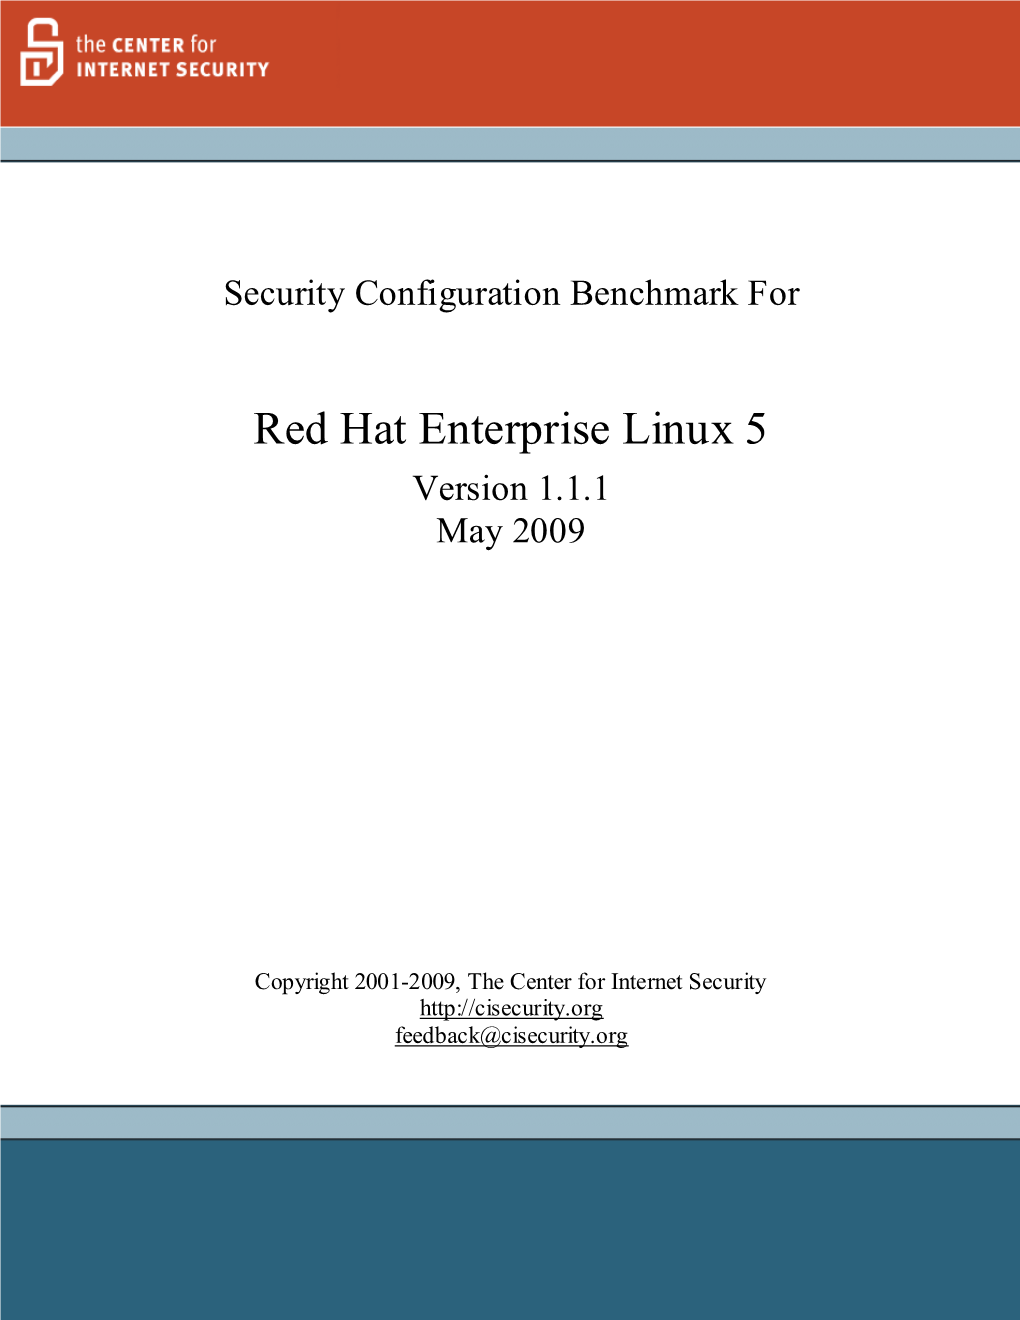 Cis Red Hat Enterprise Linux 5 Benchmark